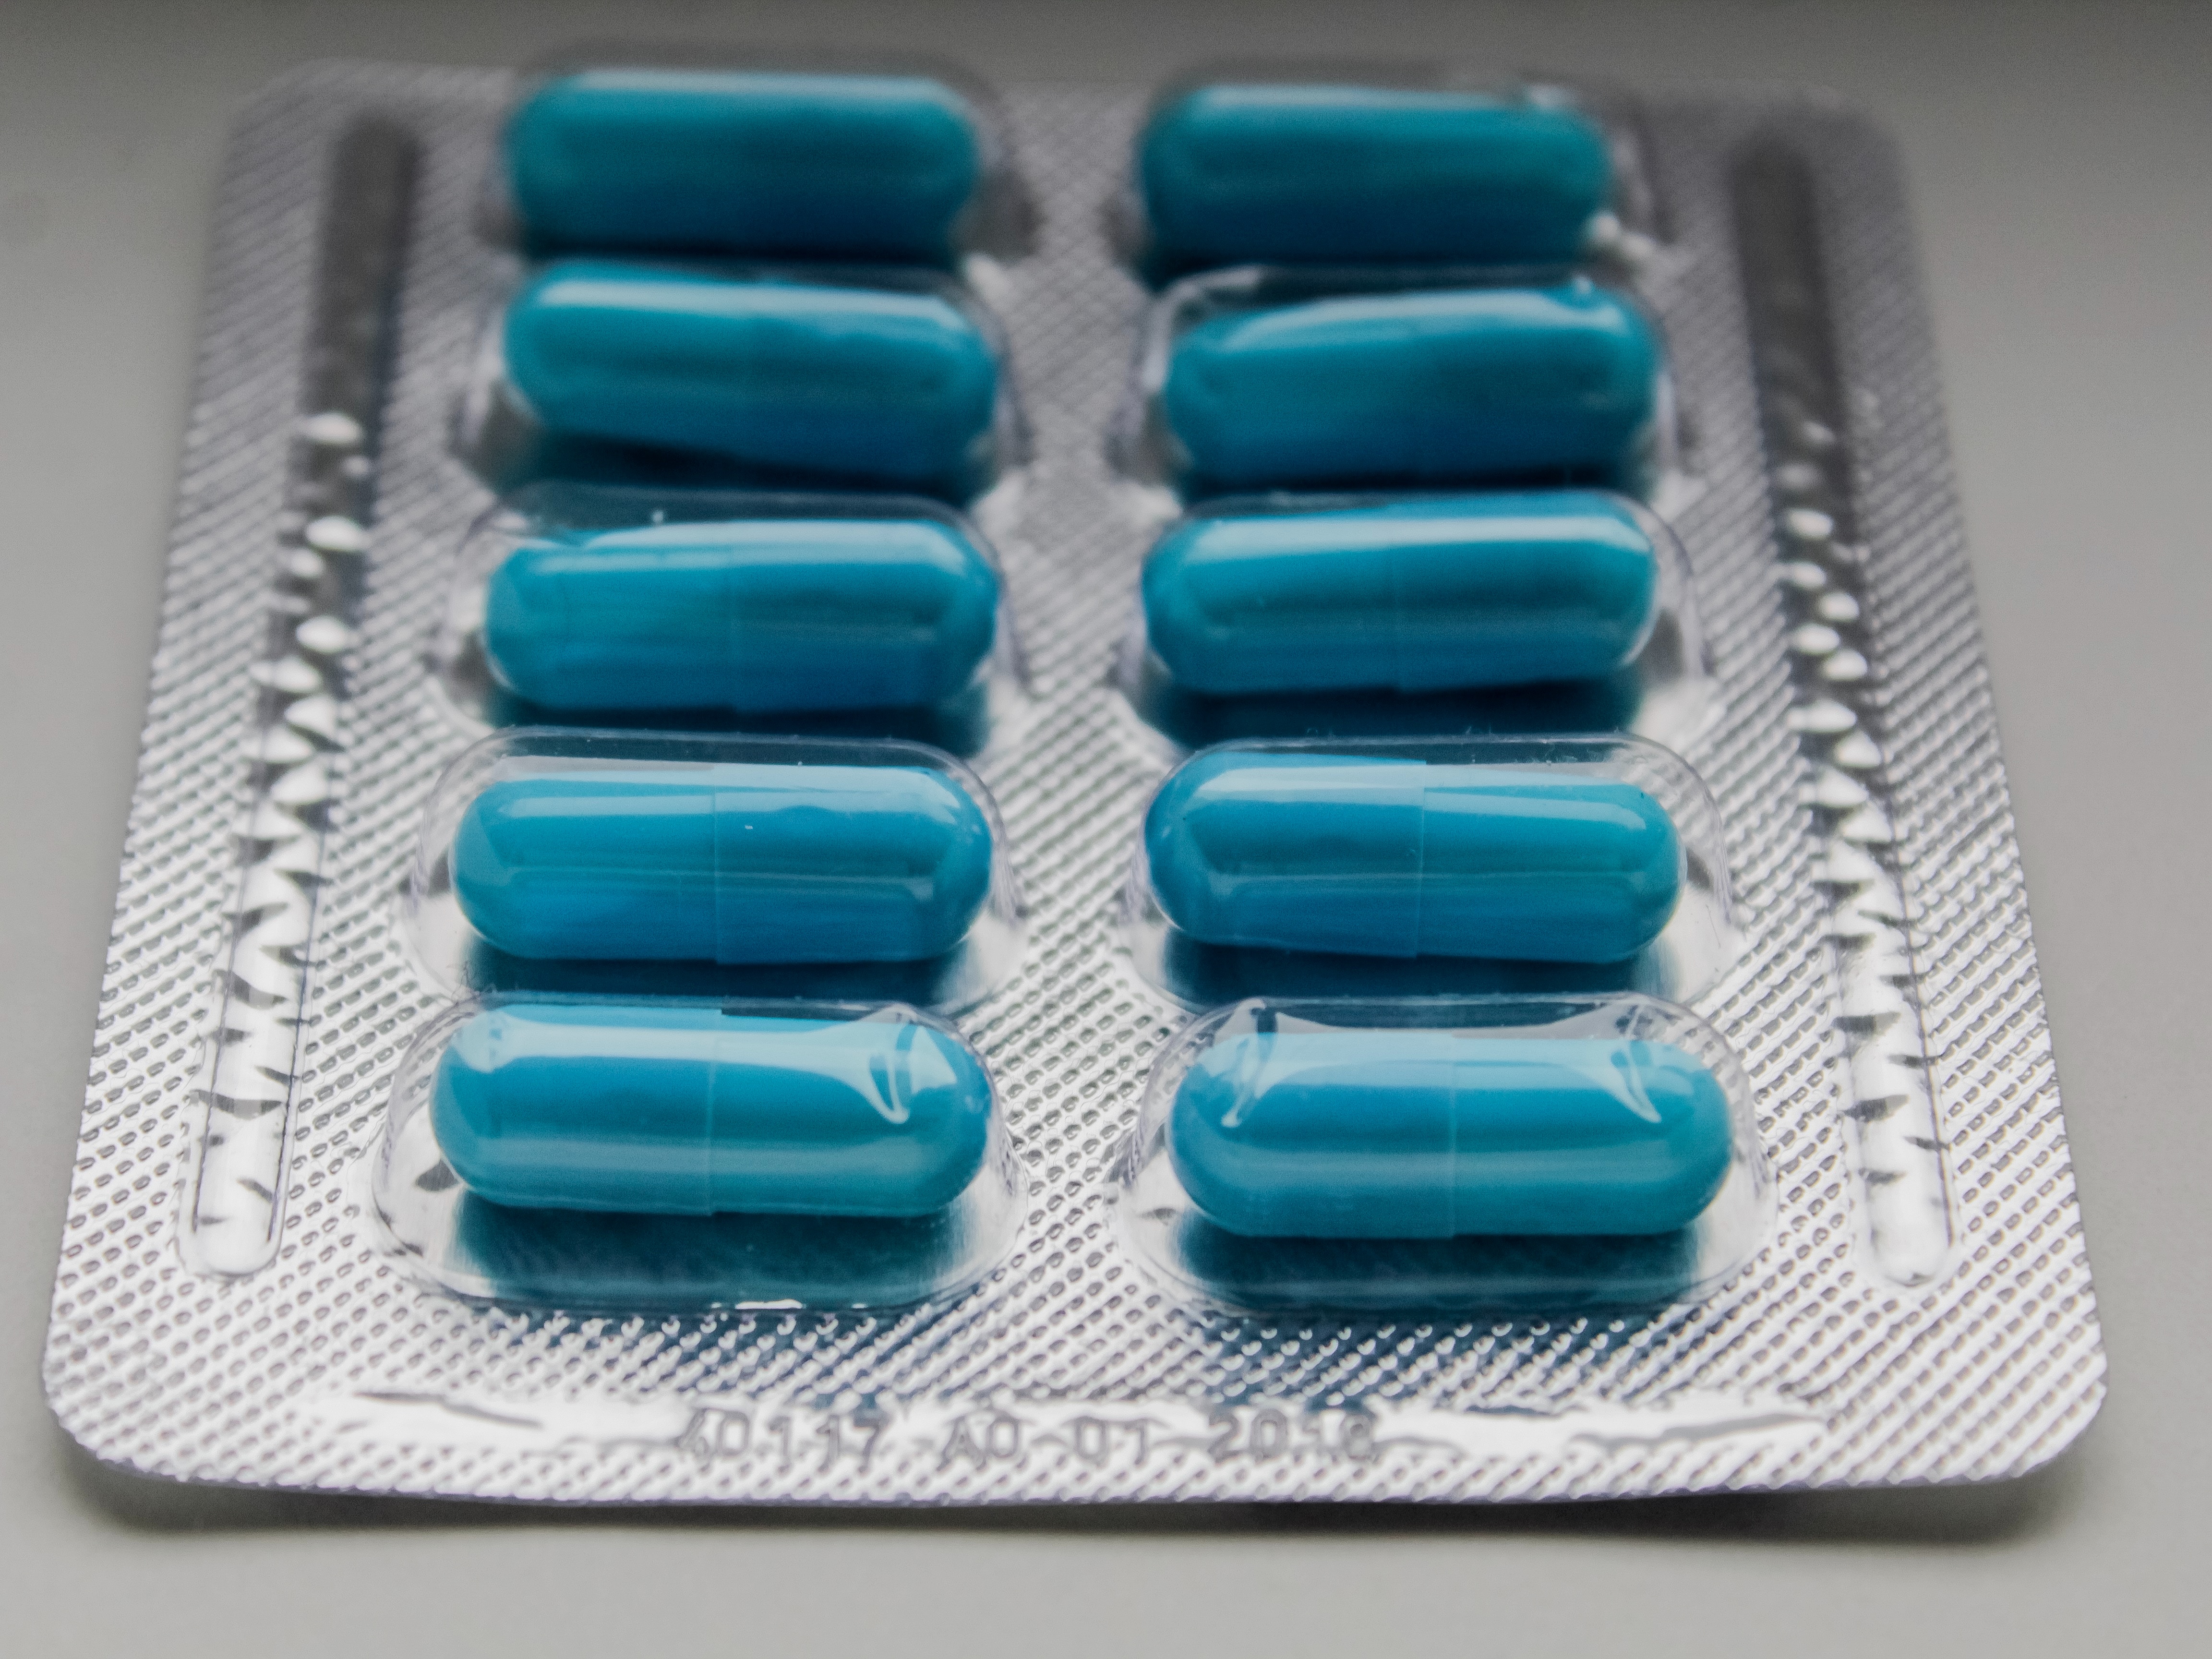 Blue pills in packaging.